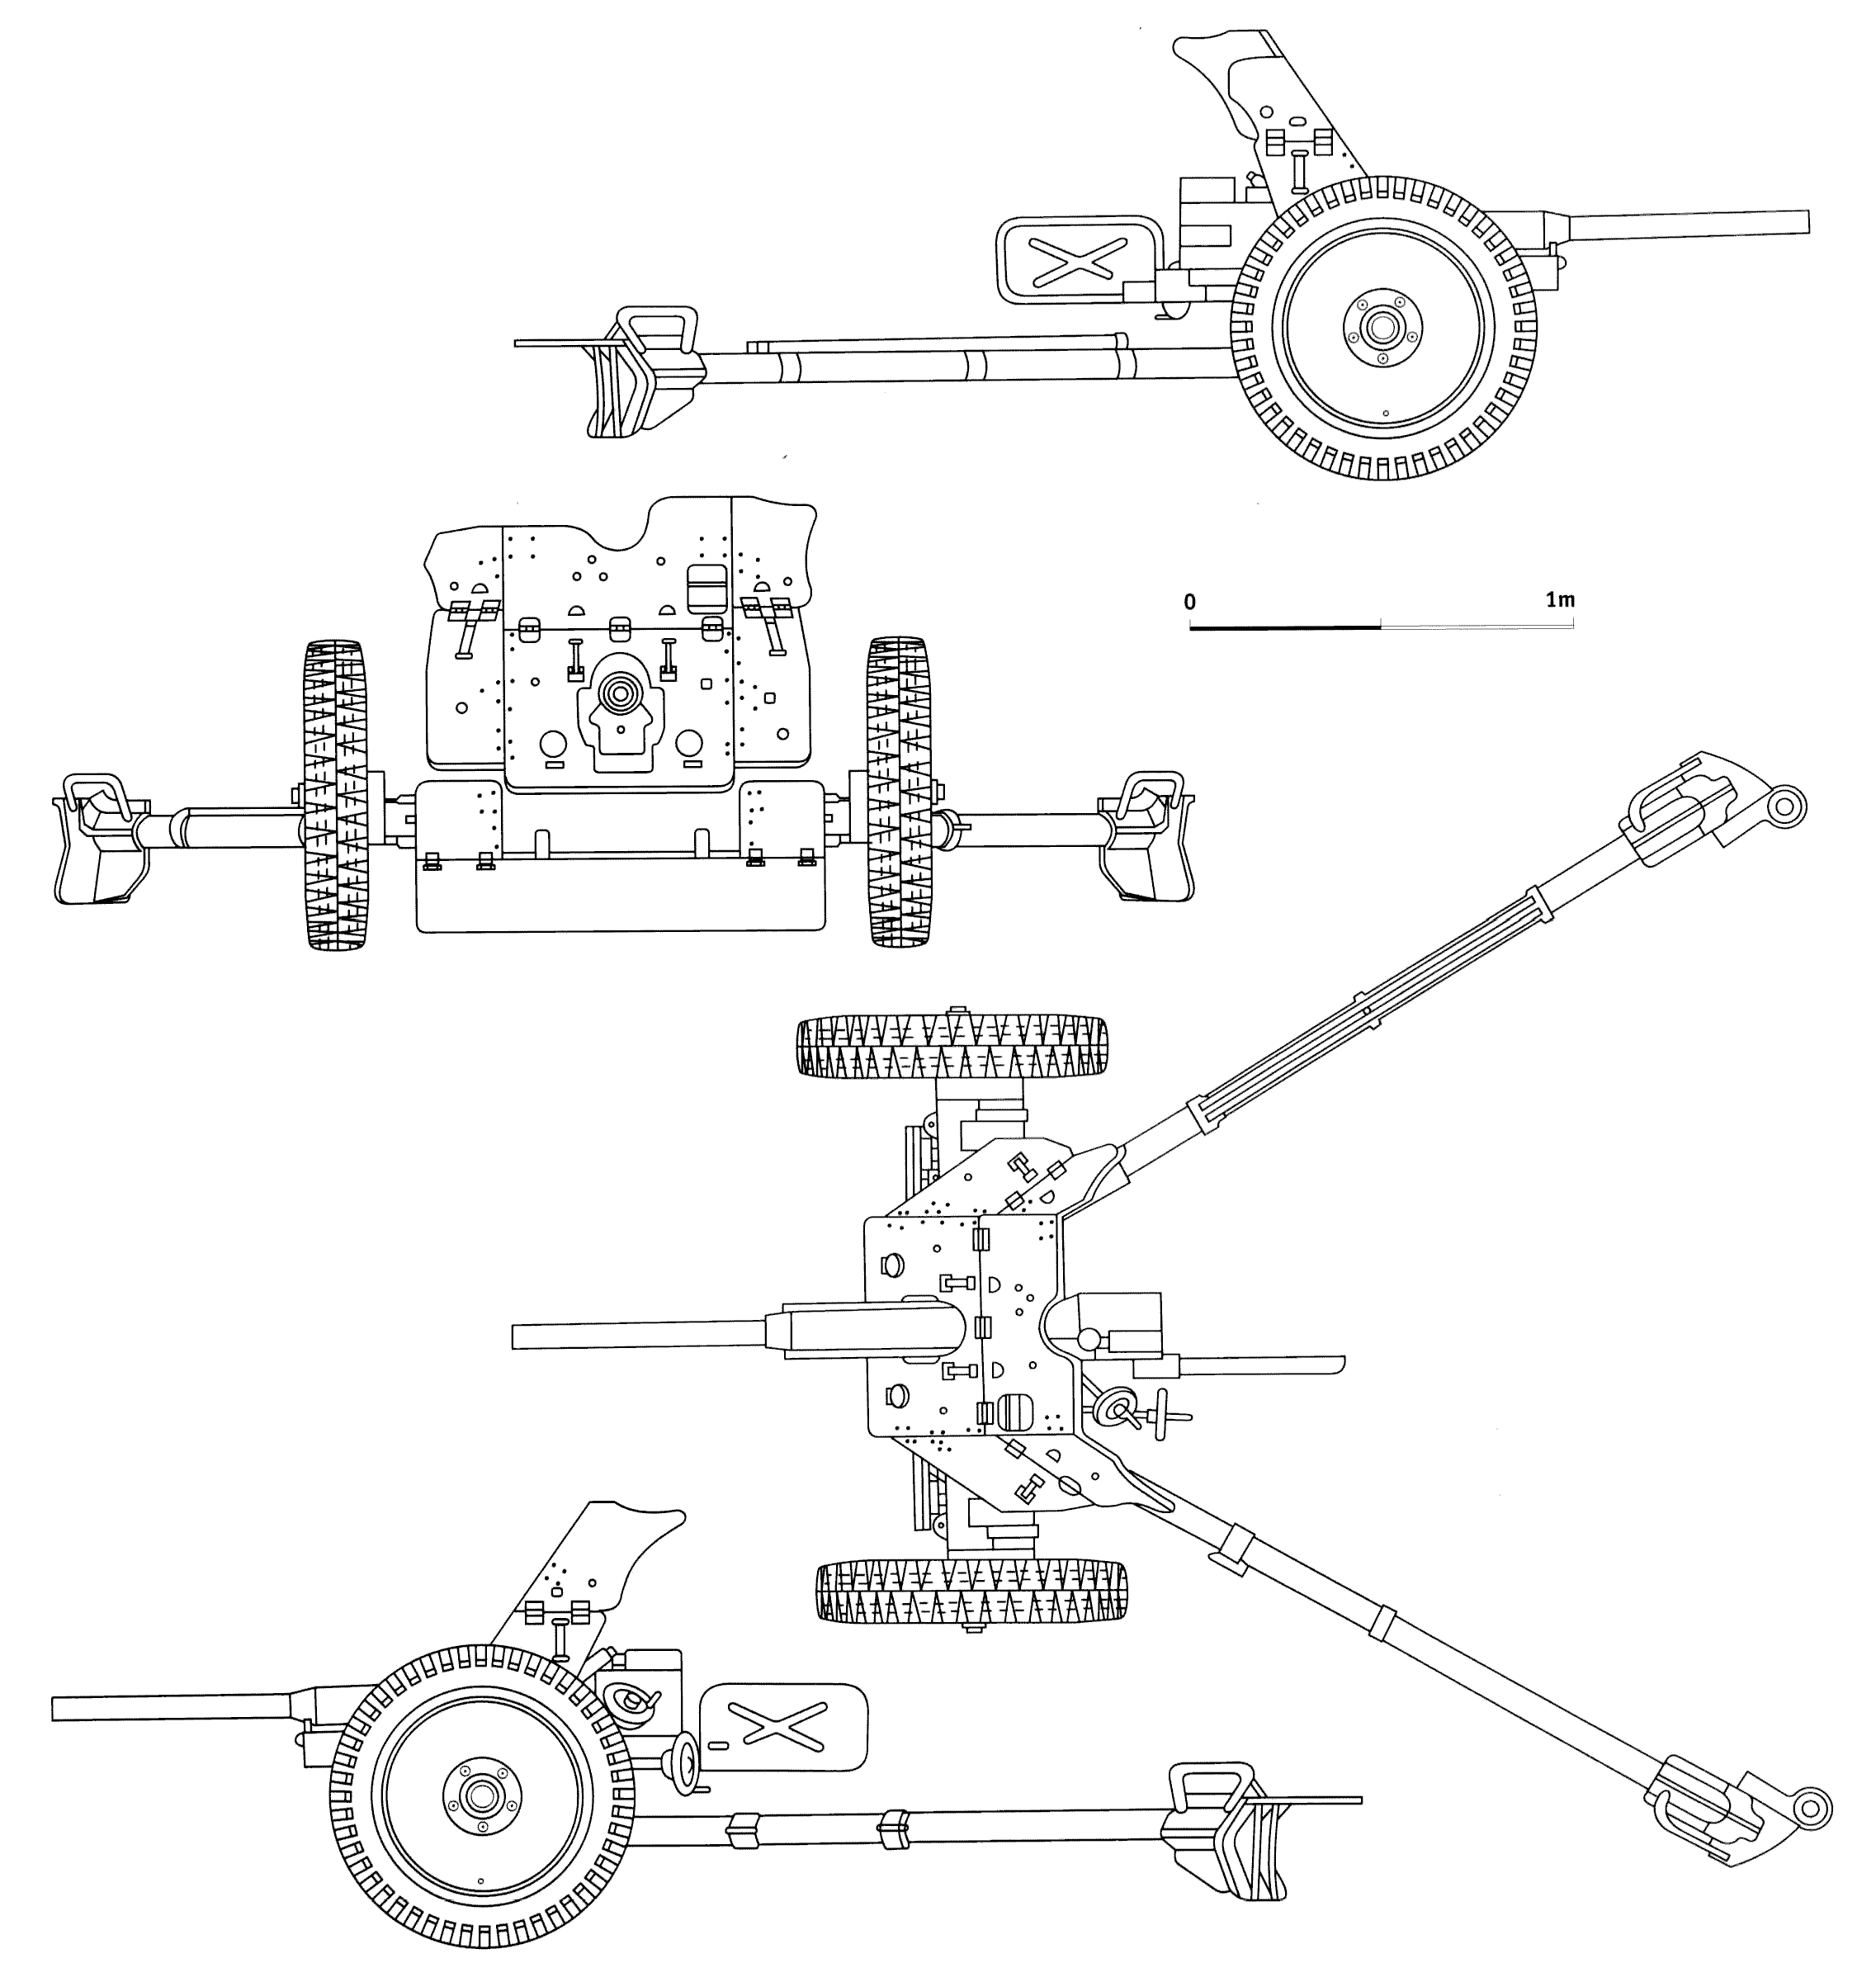 3.7 cm Pak 36 blueprint